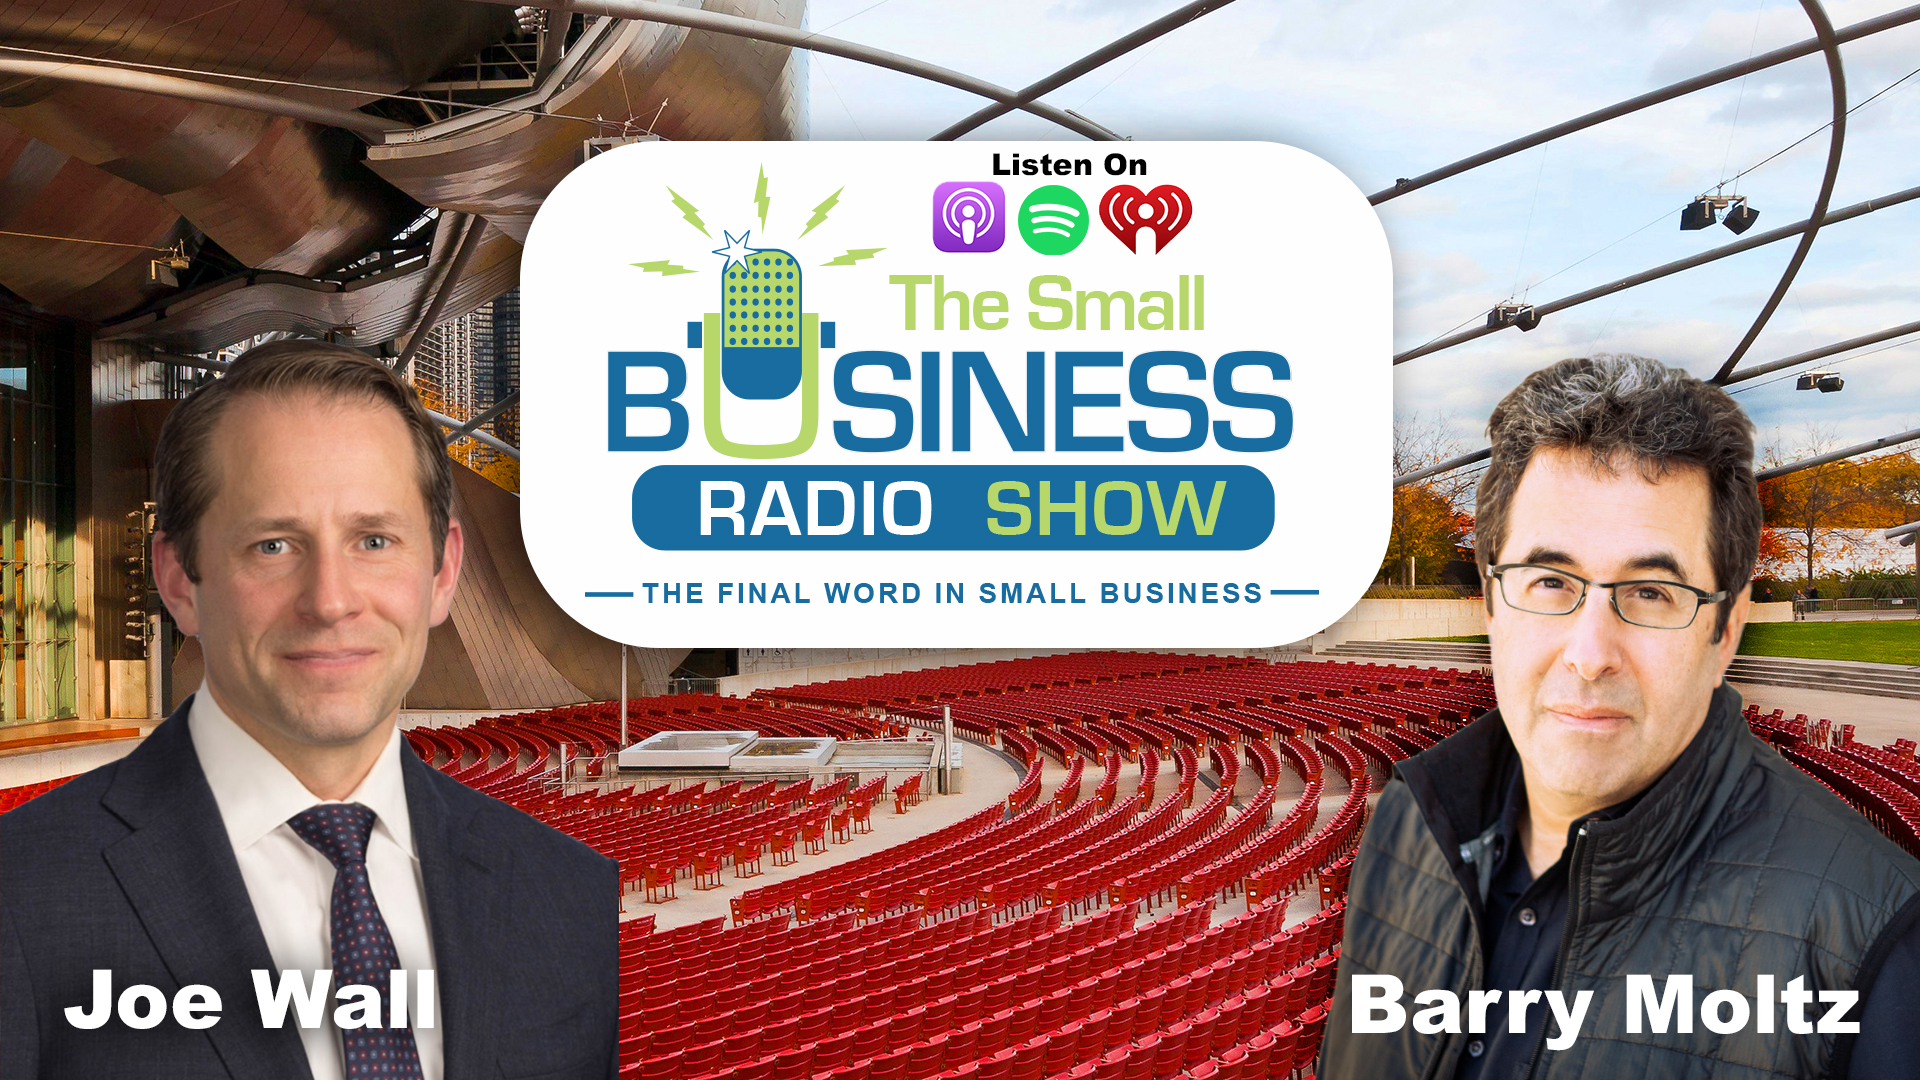 Joe Wall on The Small Business Radio Show